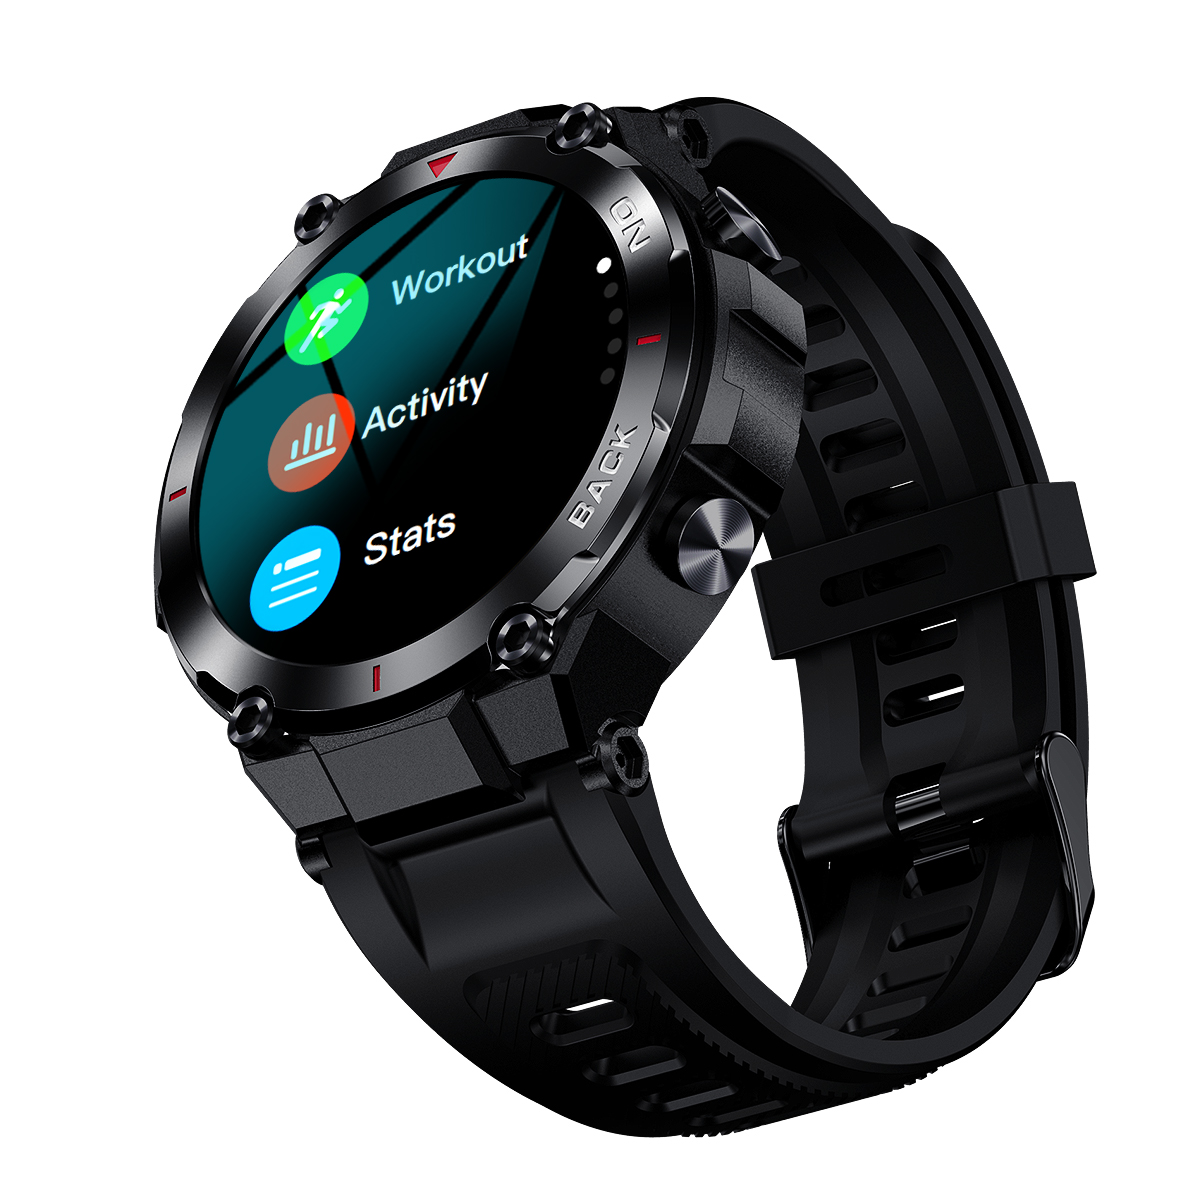 Ceas smartwatch barbati TechONE® K37 Tactics, 1.32 inch IPS HD, GPS, multi sport, ritm cardiac inteligent, oxigen, rezistent la apa IP68, notificari, vibratii, negru